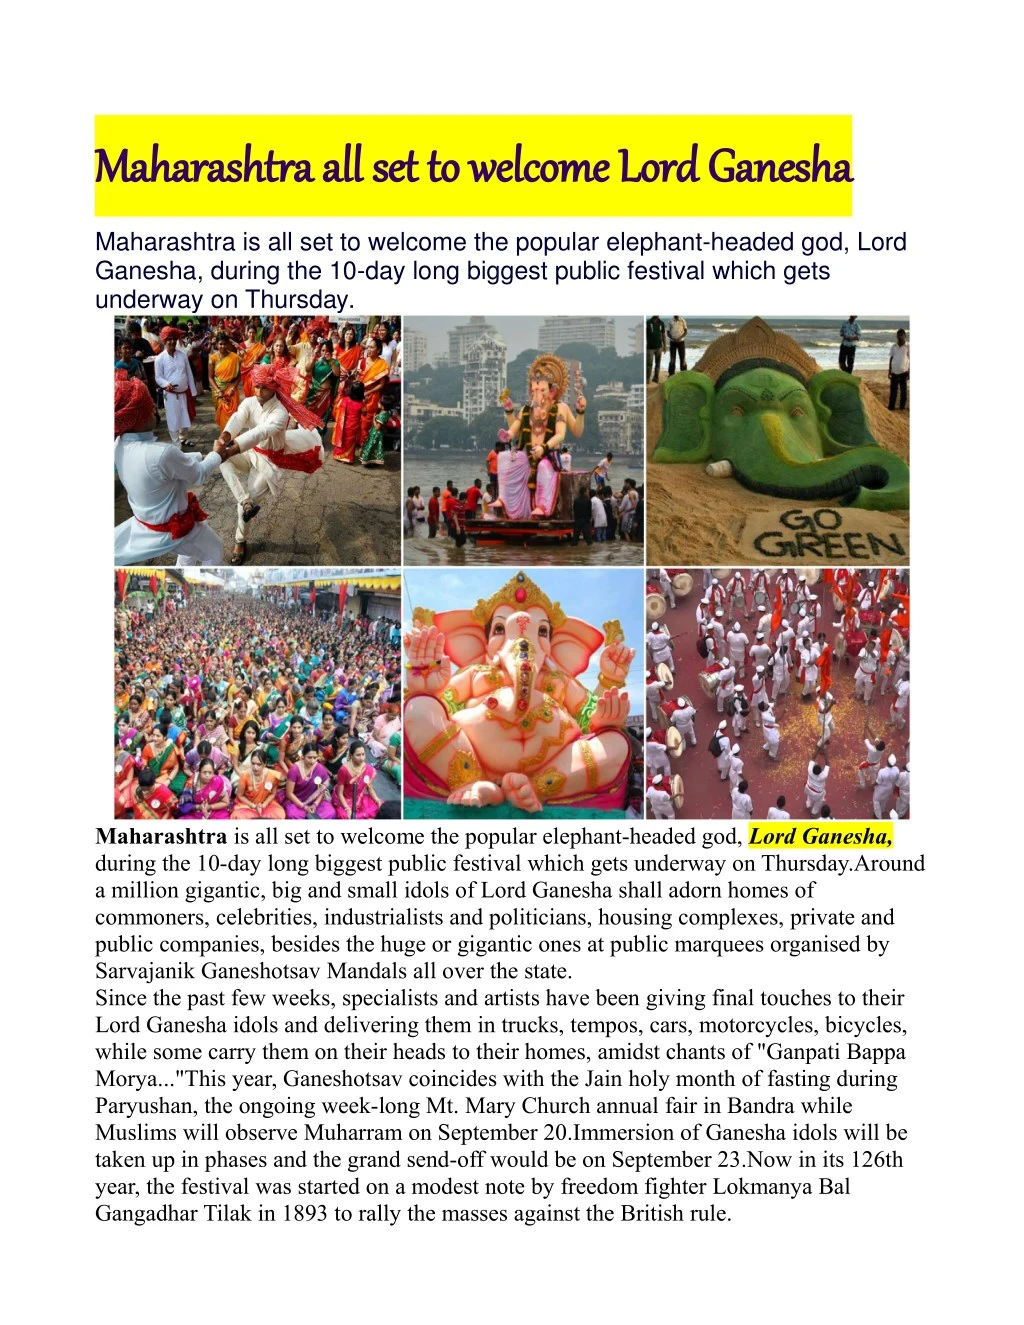 maharashtra all set to welcome lord ganesha